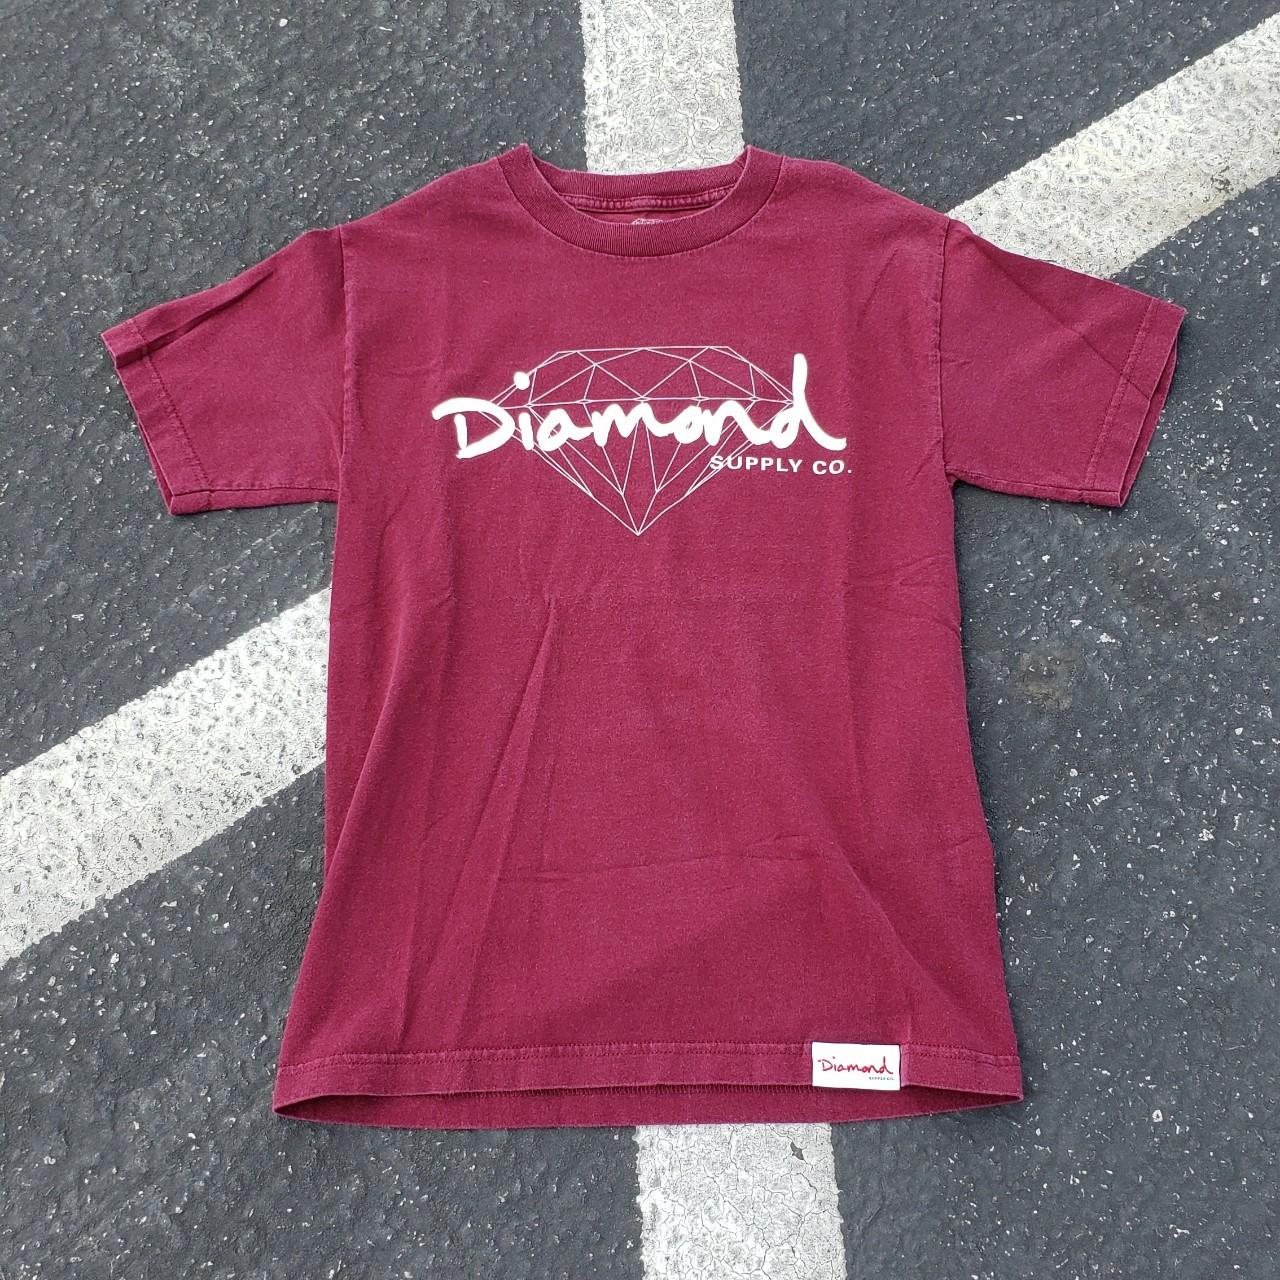 Diamond Supply Co. Men's Burgundy T-shirt (2)